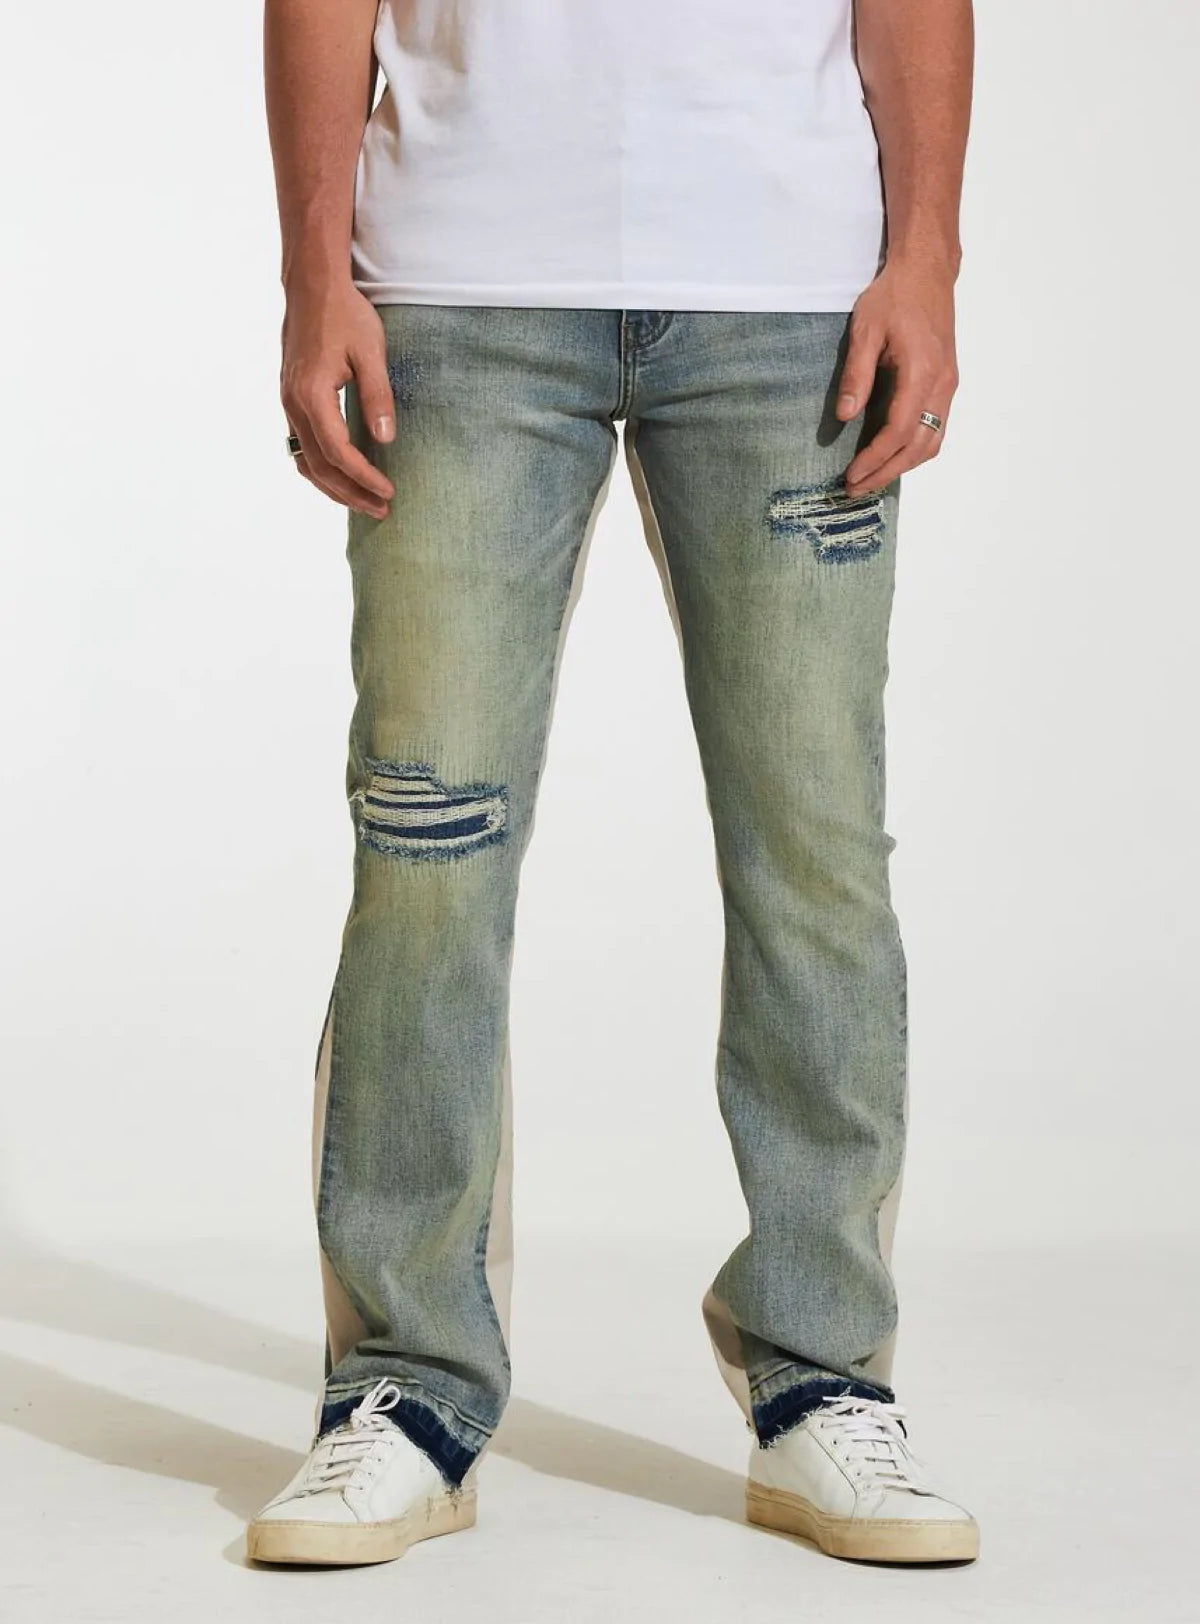 Embellish Denim Jeans